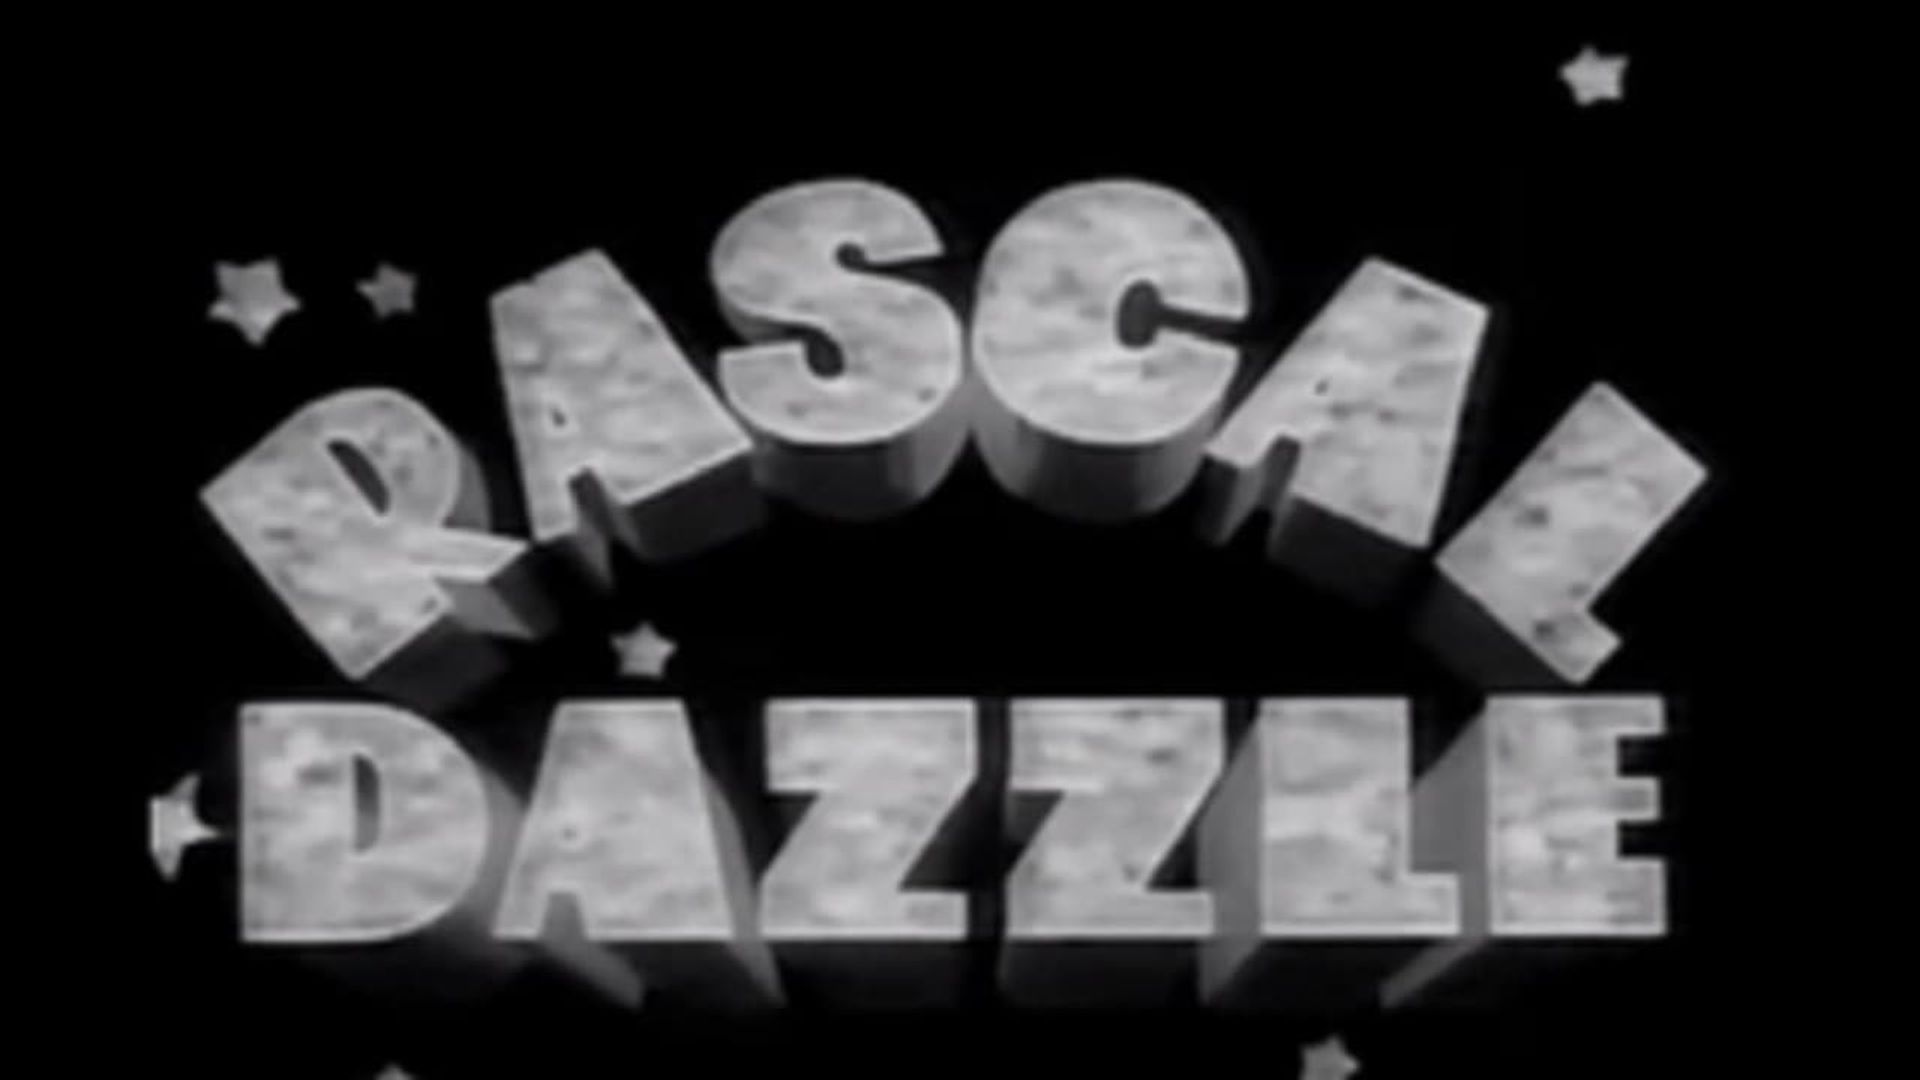 Rascal Dazzle background